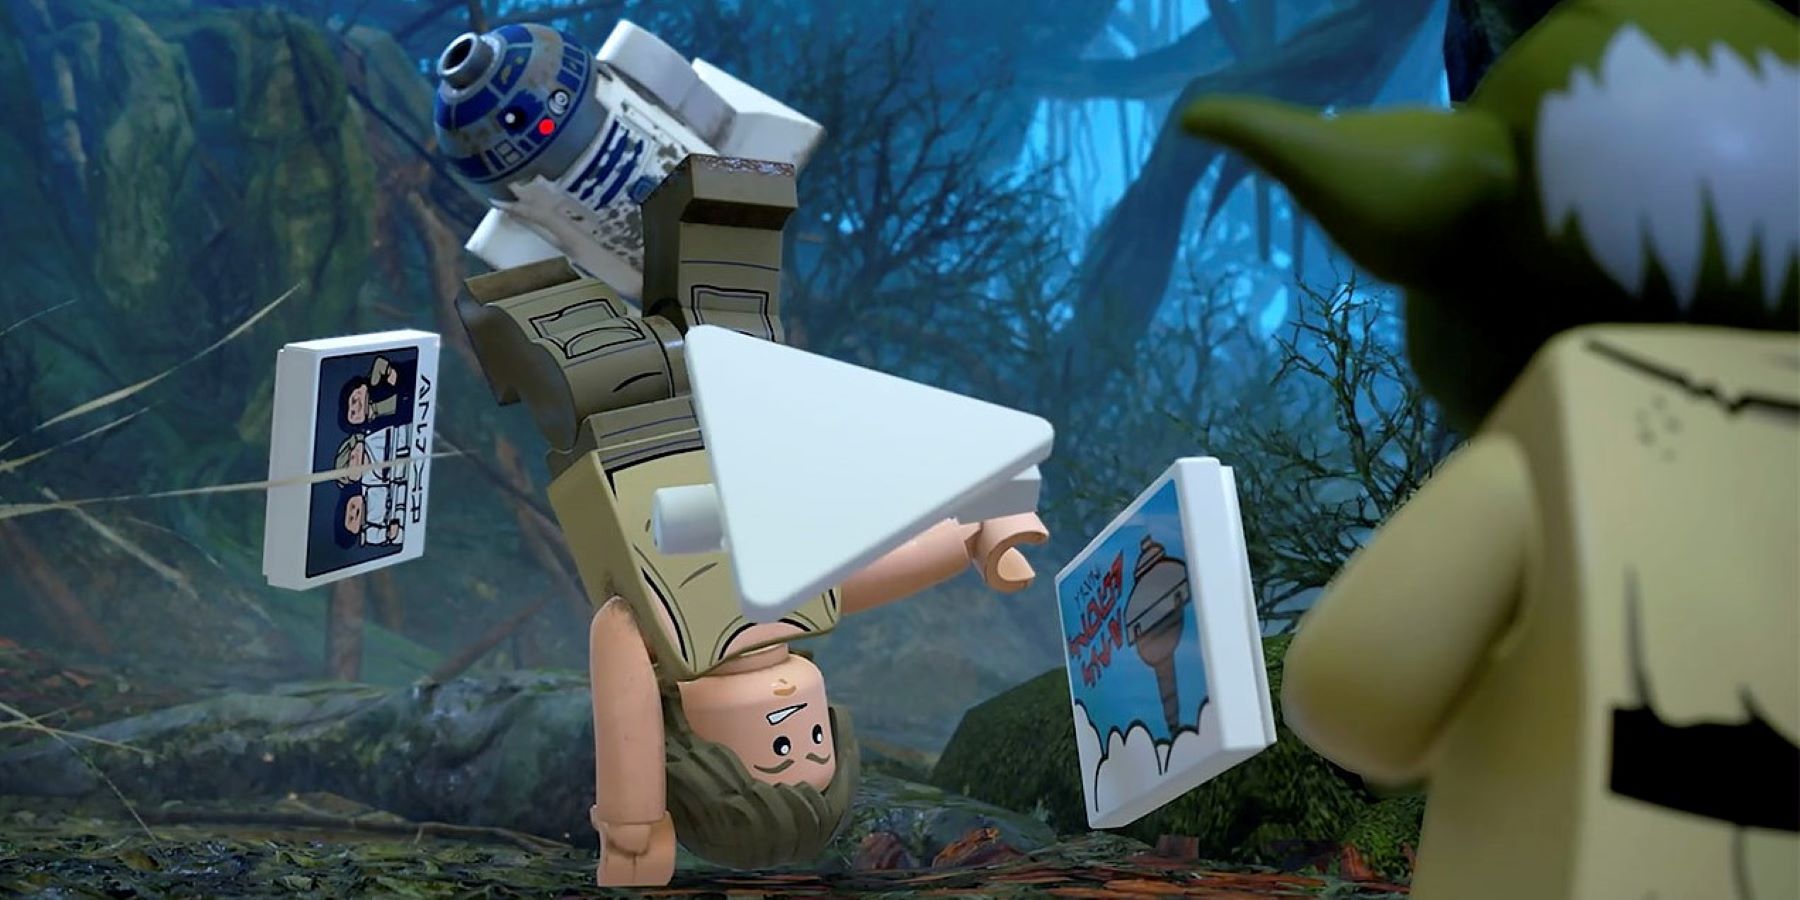 Luke Skywalker training on Dagobah with Yoda and R2-D2 in LEGO Star Wars: The Skywalker Saga